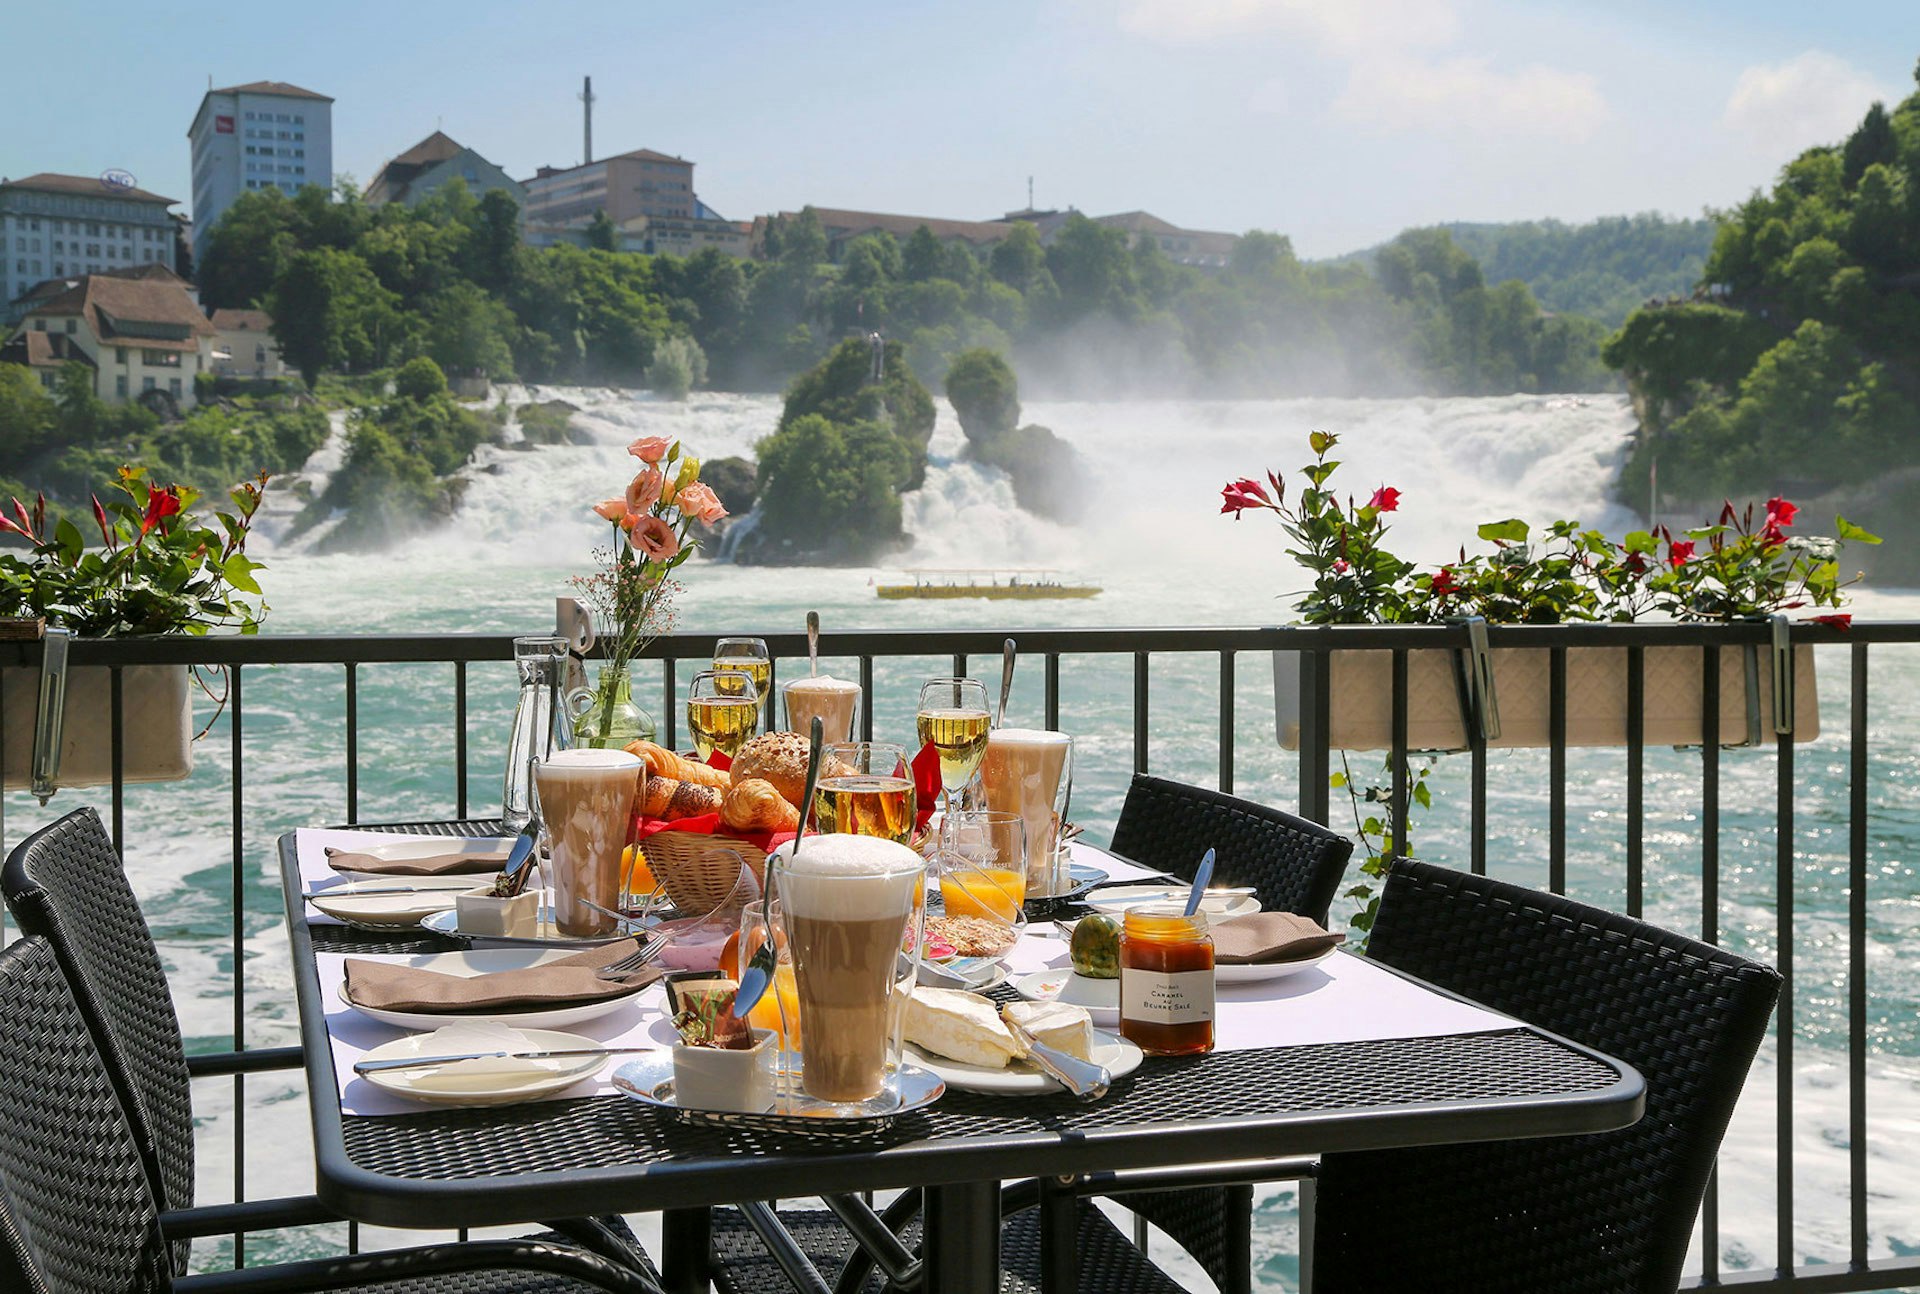 Sunday breakfast next to the Rhine Falls